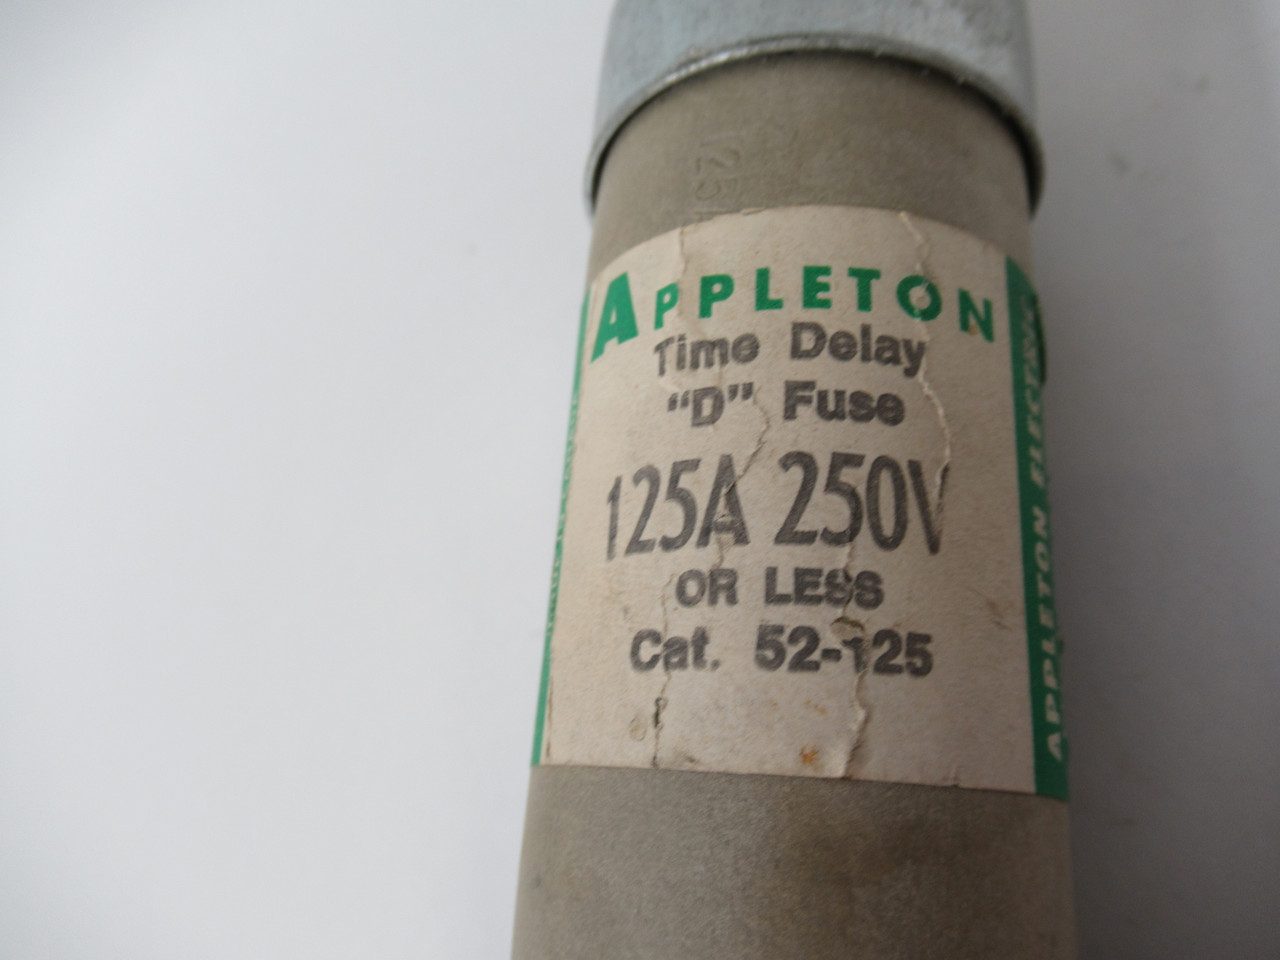 Appleton 52-125 Time Delay Fuse 125A 250V USED